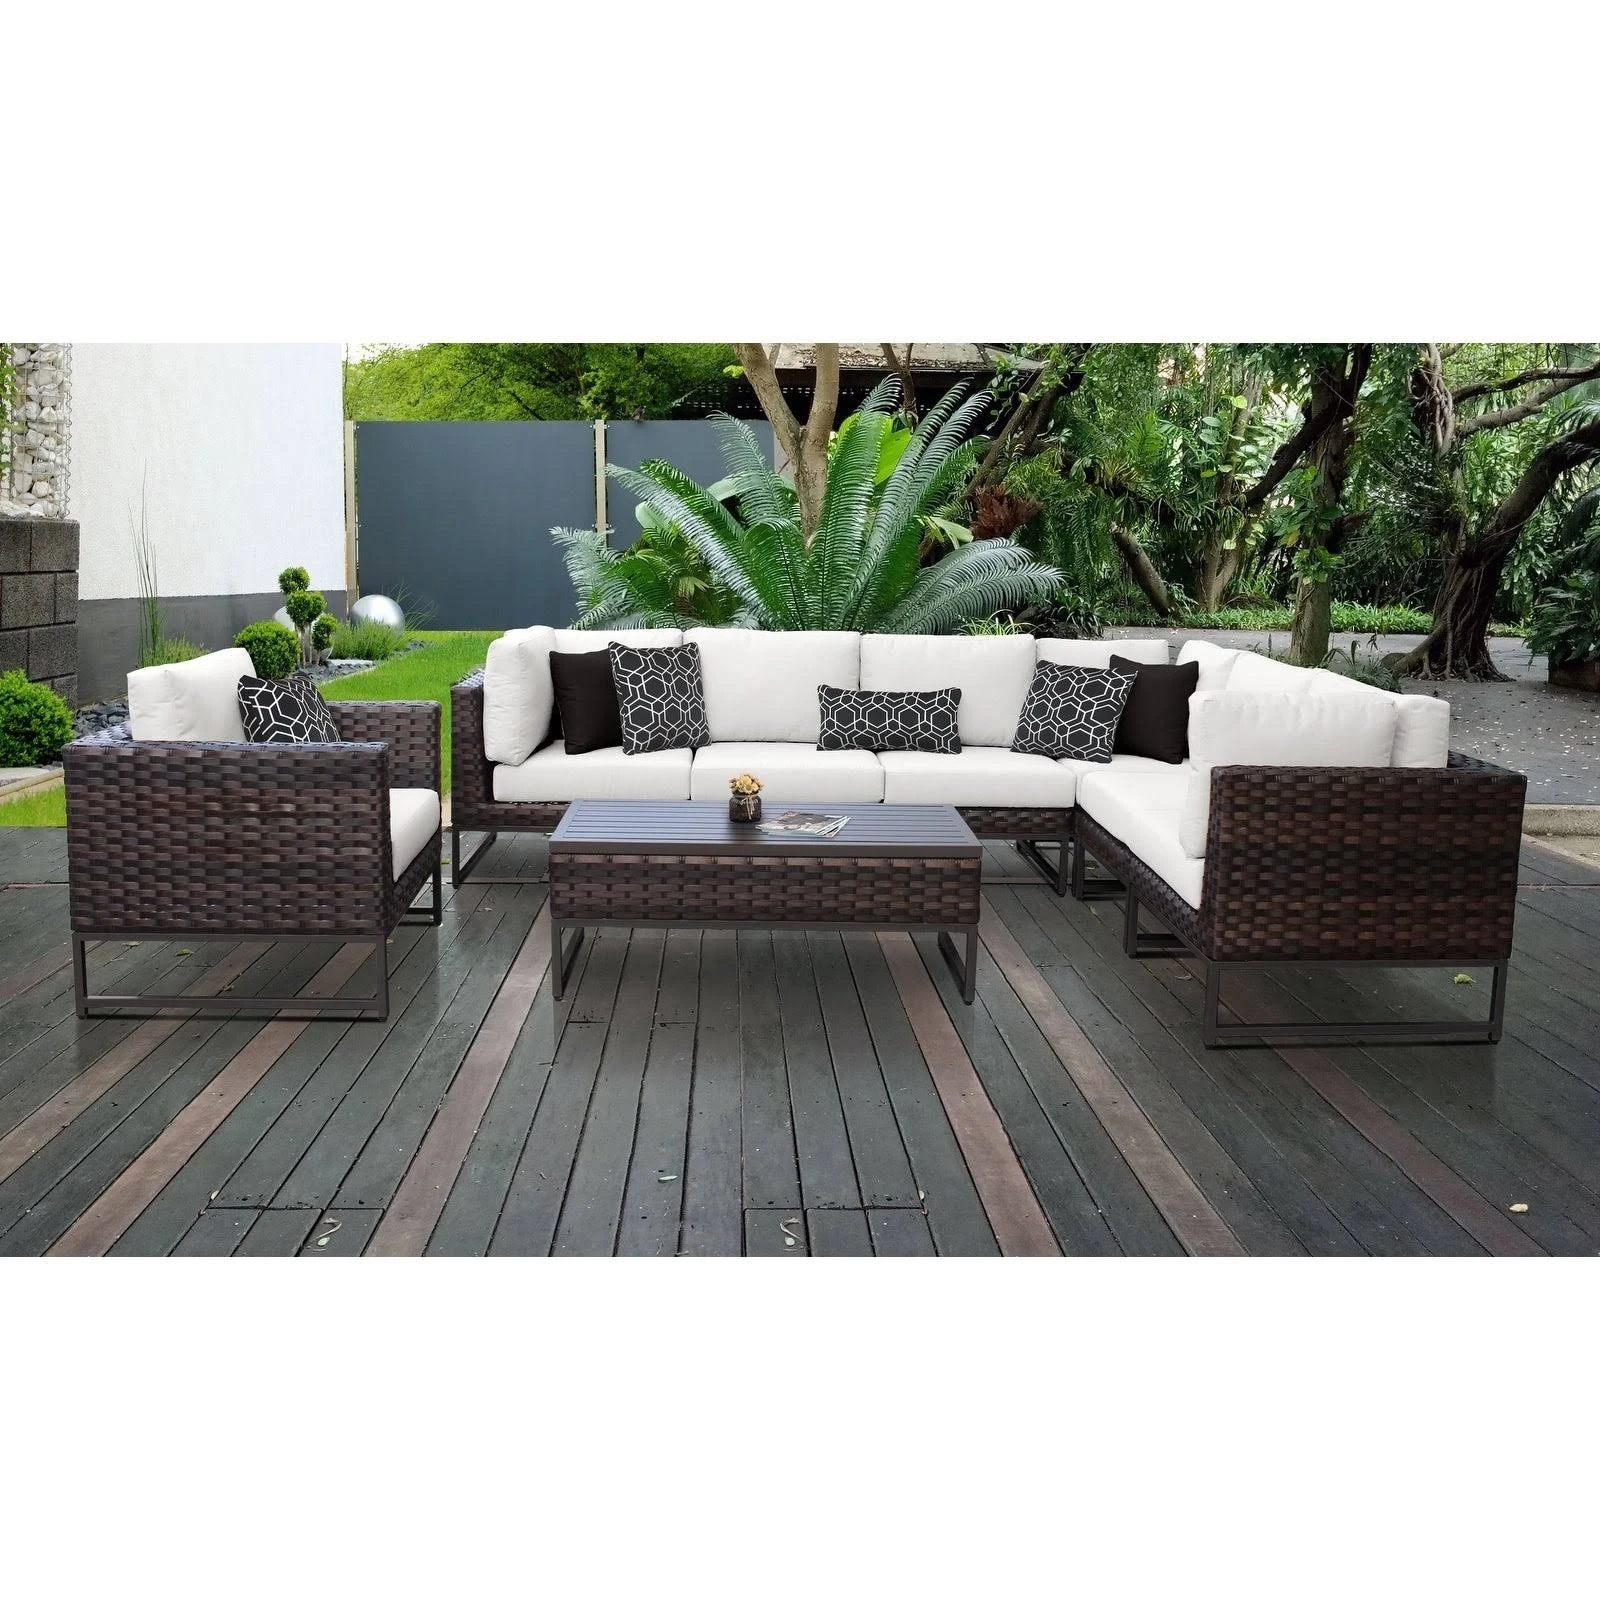 The new listing metal aluminum conversation sofa set garden outdoor furniture